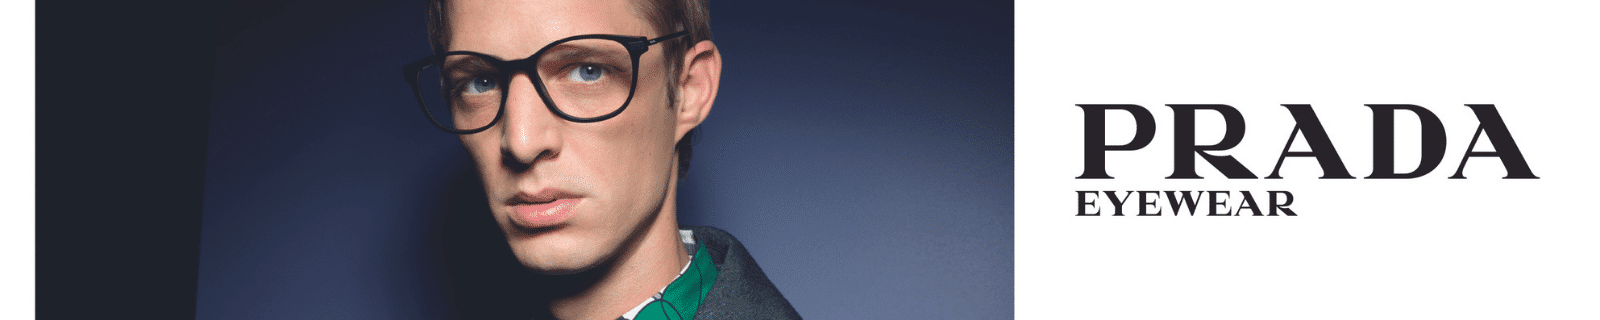 man wearing prada glasses and green printed shirt